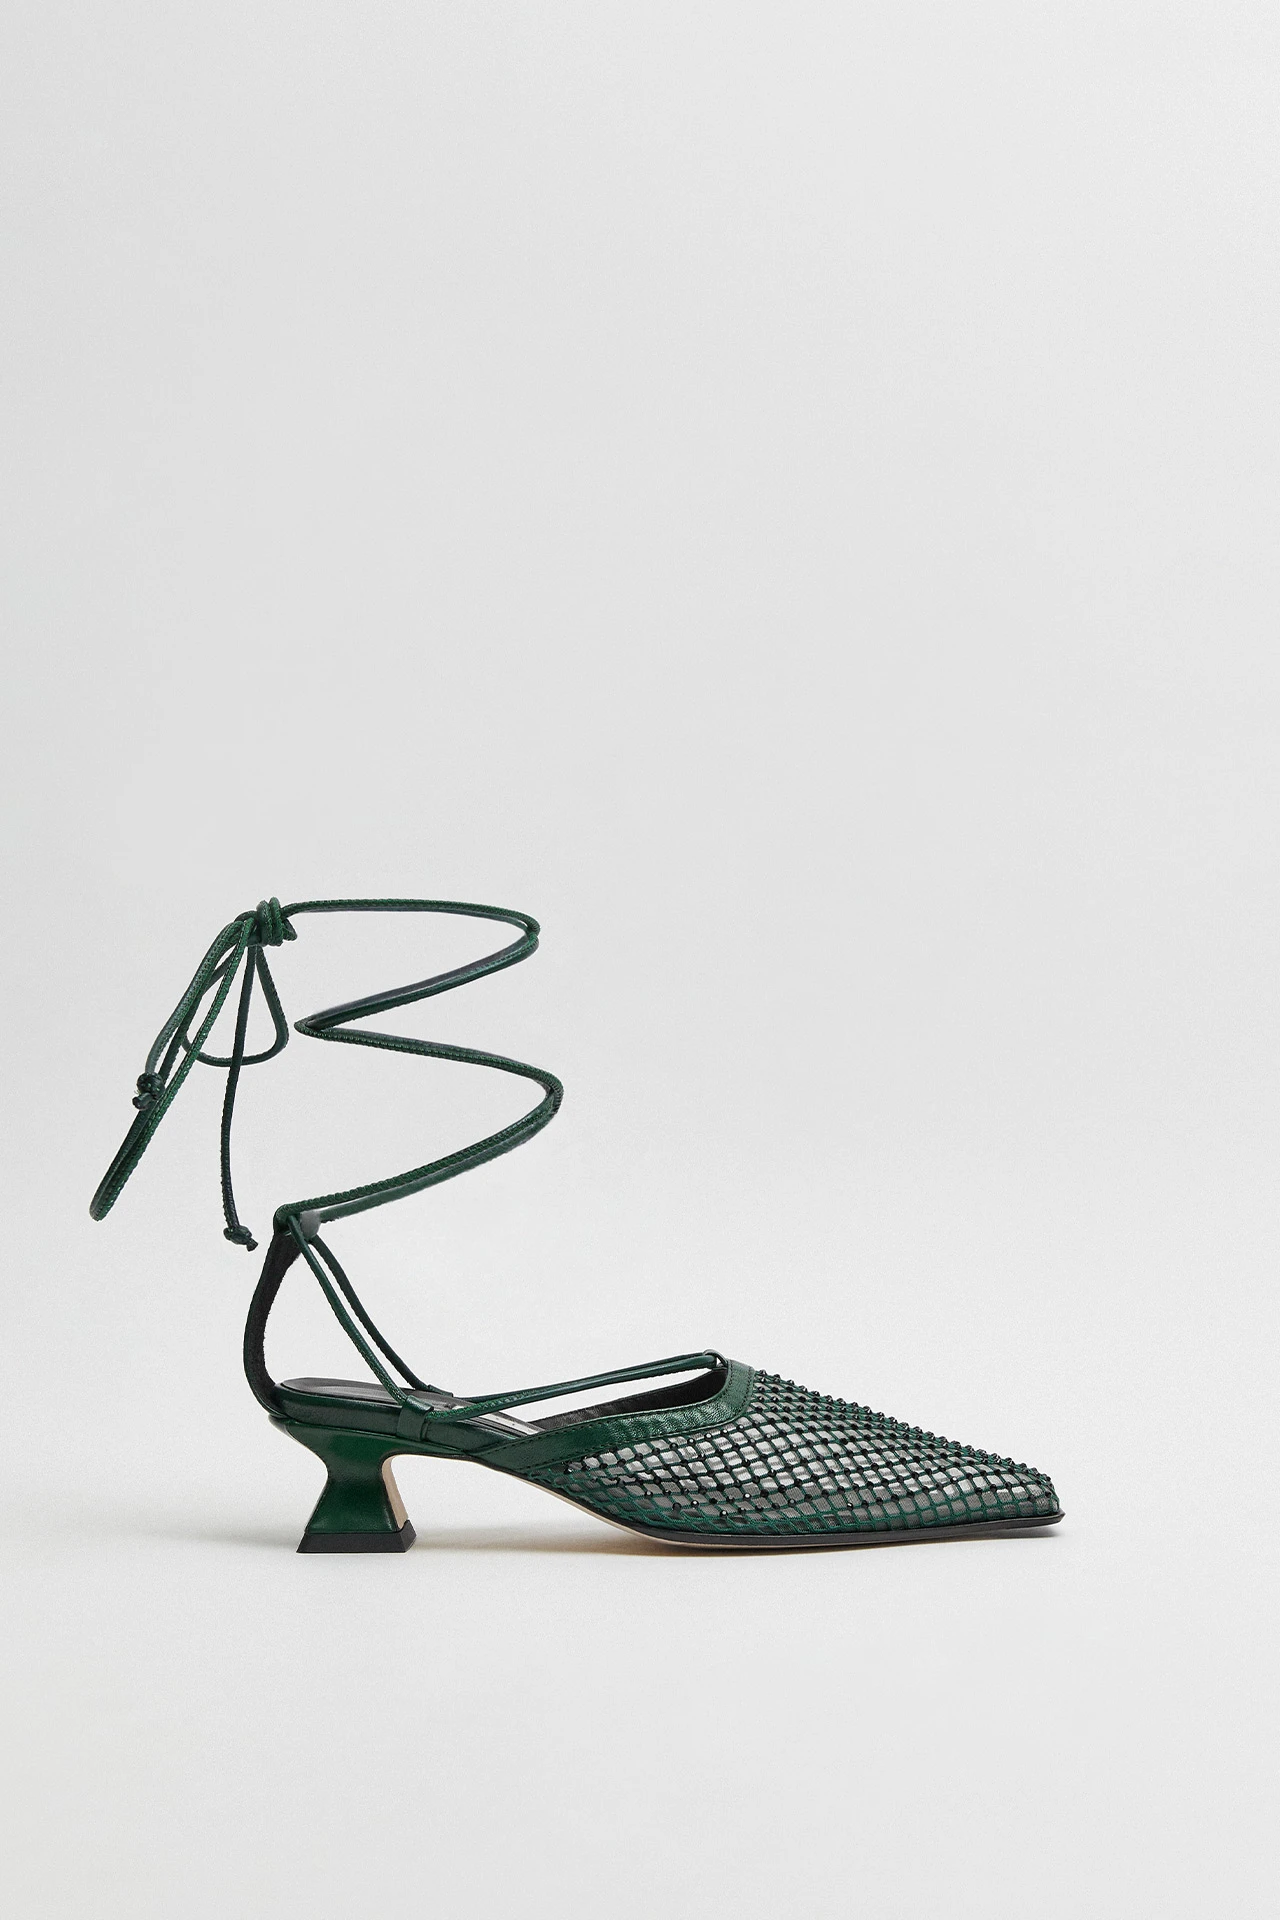 Miista-andes-green-mesh-mule-sandals-01